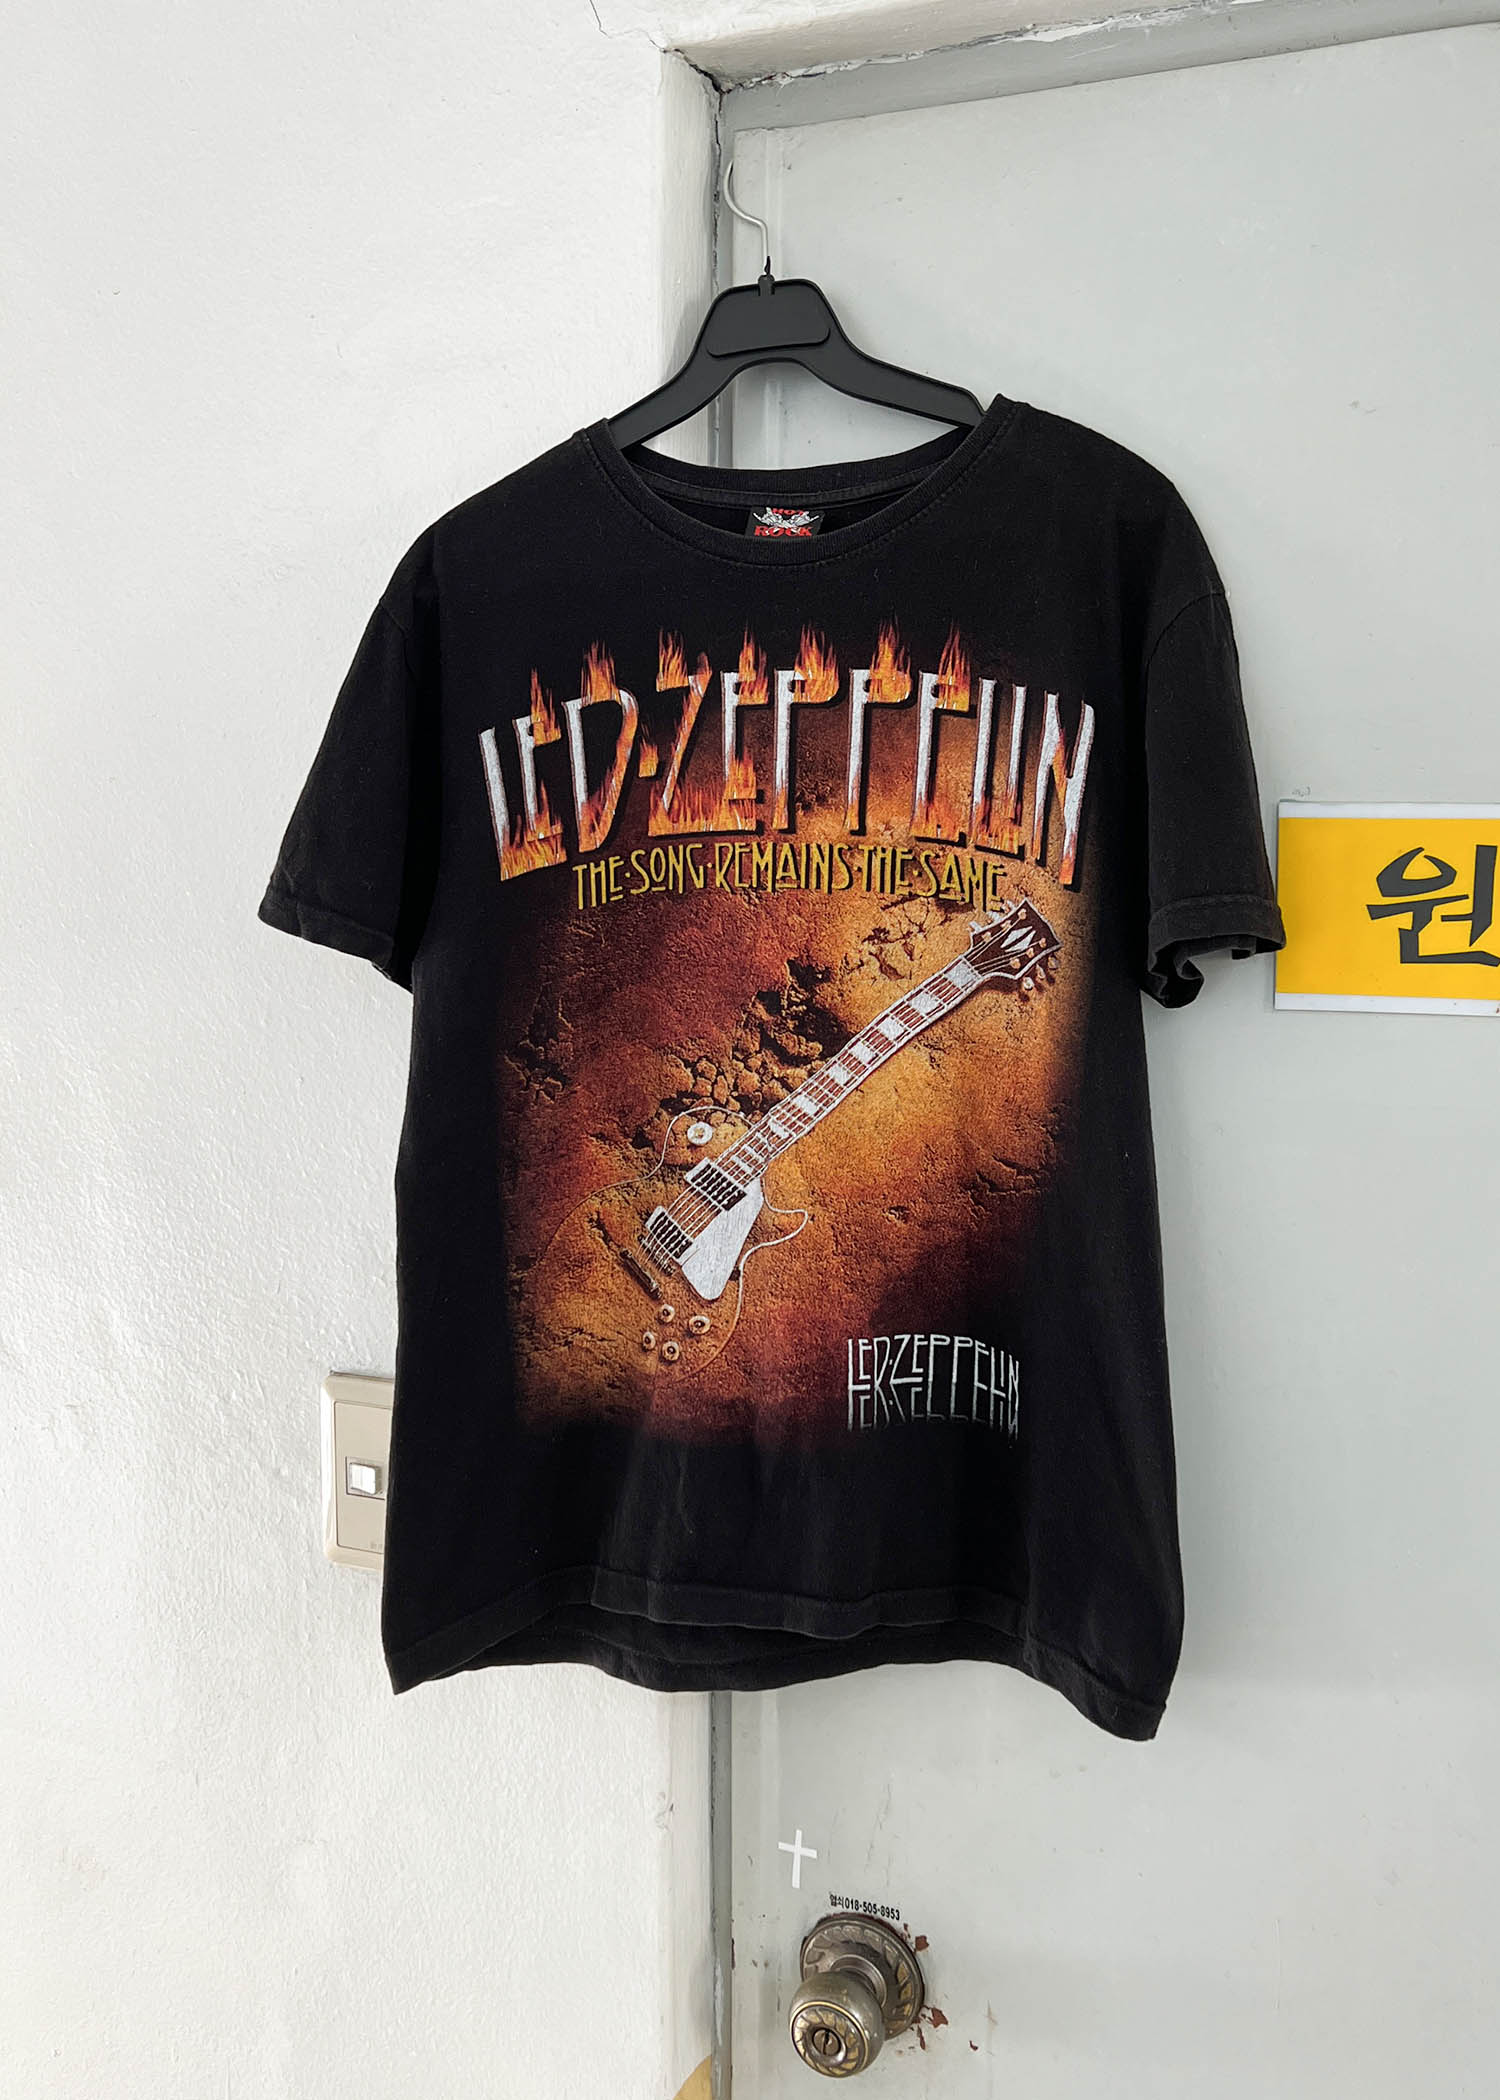 HOT ROCK led zeppllin t-shirts